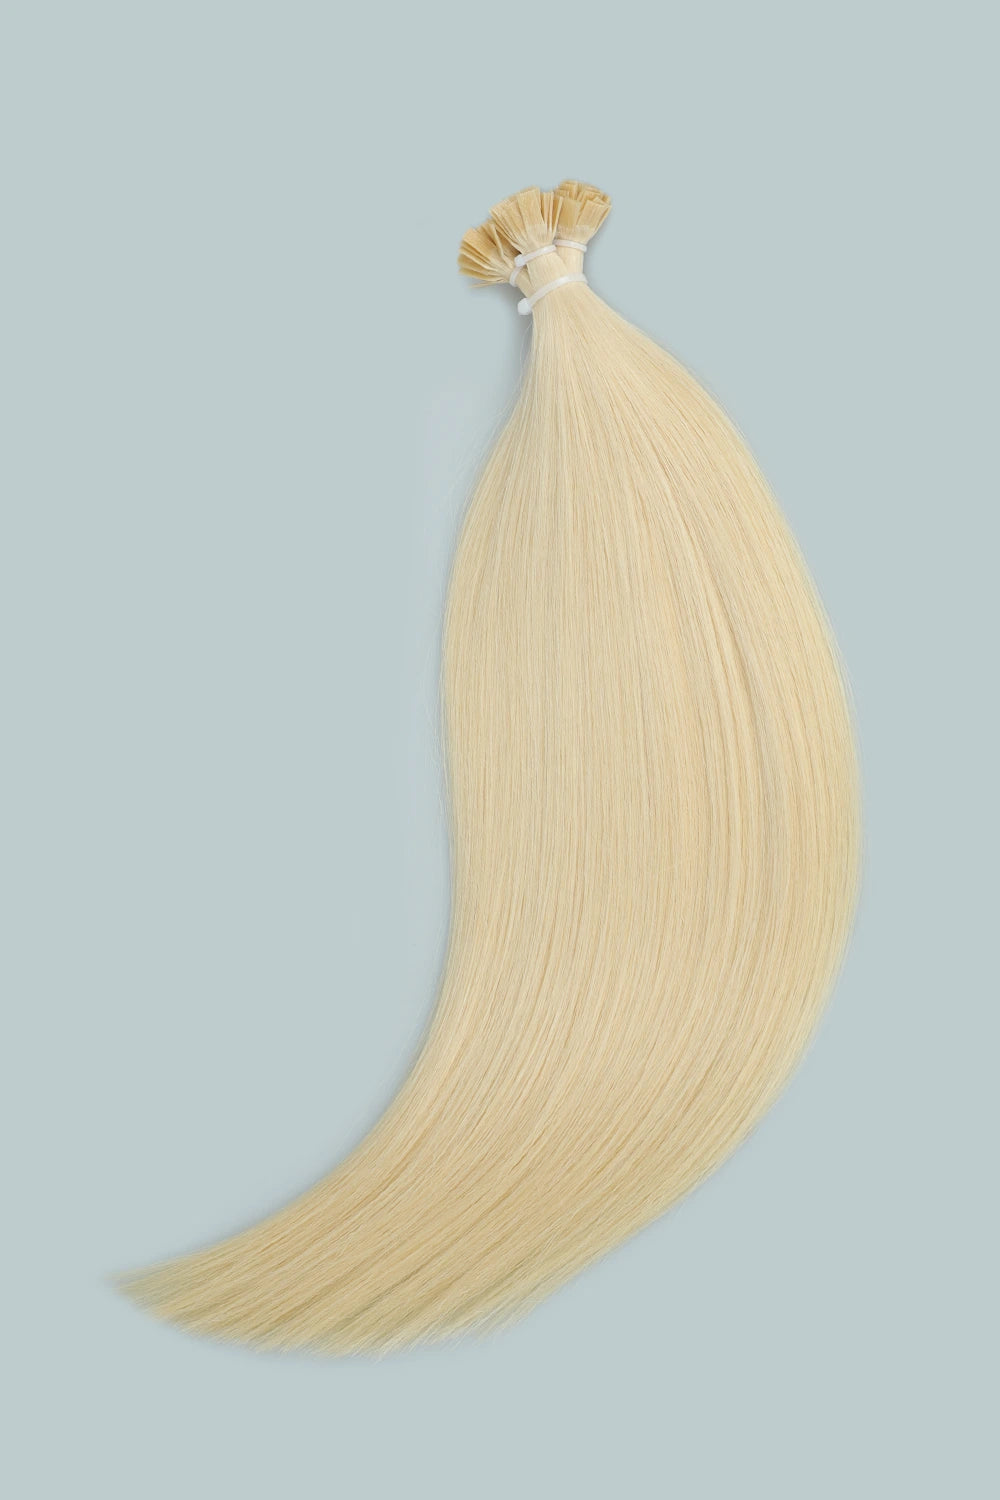 Extensiones de cabello adheridas con queratina | Punta plana | Cabello rubio 613#